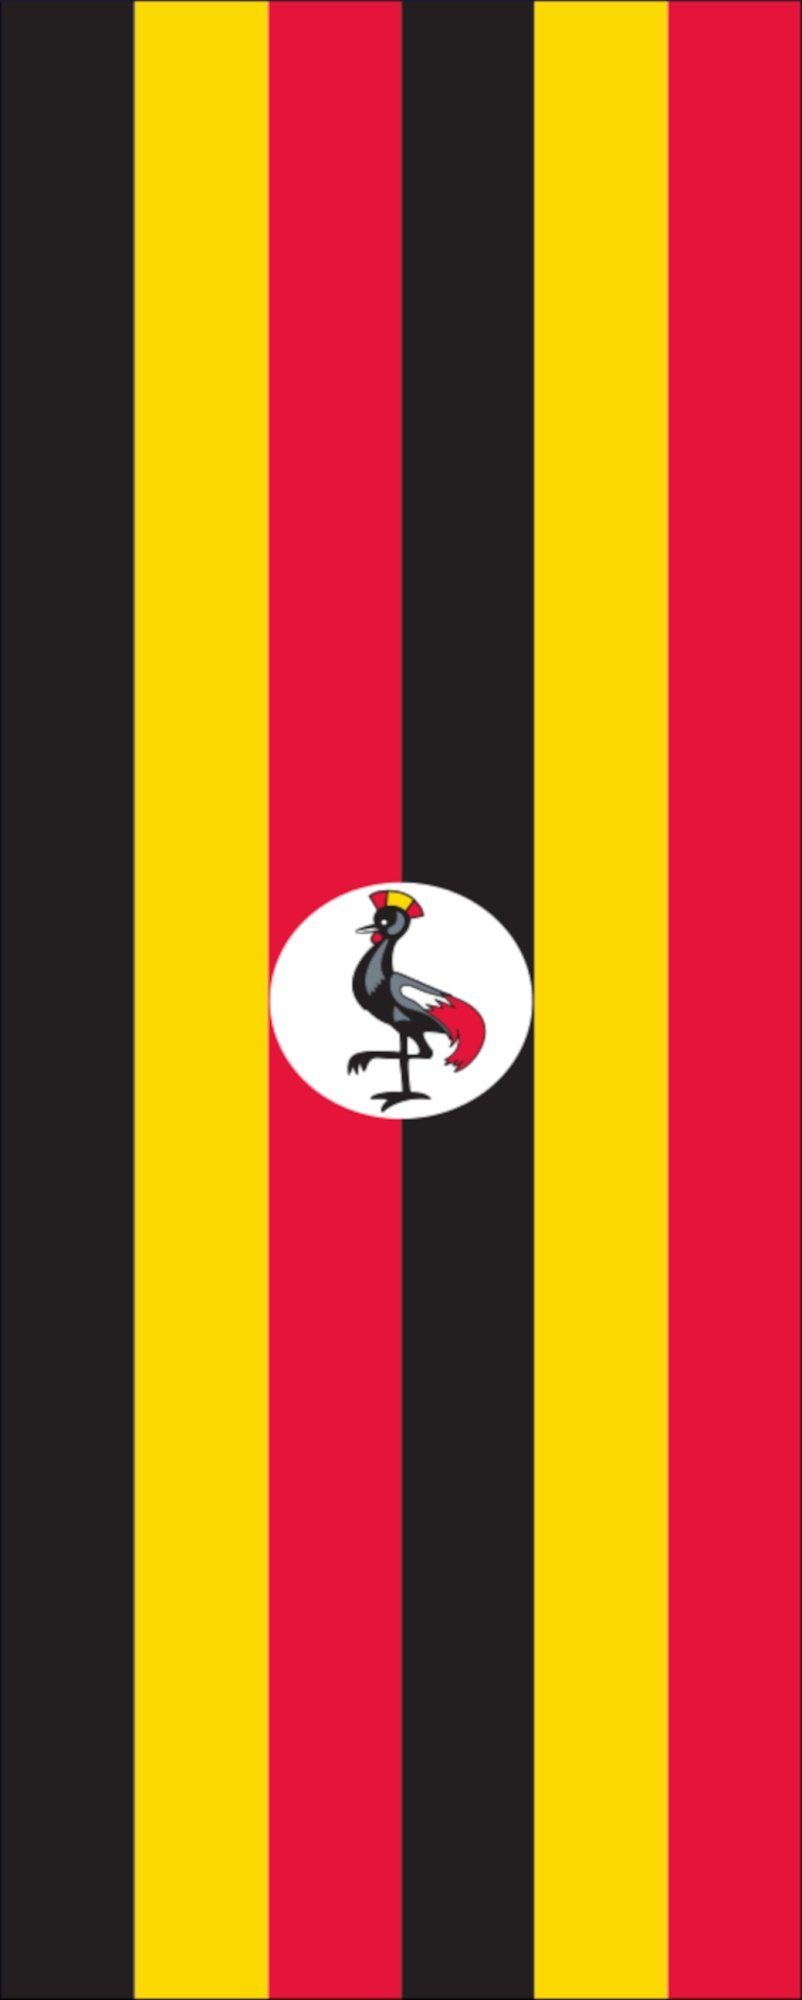 Flagge Uganda g/m² Flagge Hochformat flaggenmeer 110